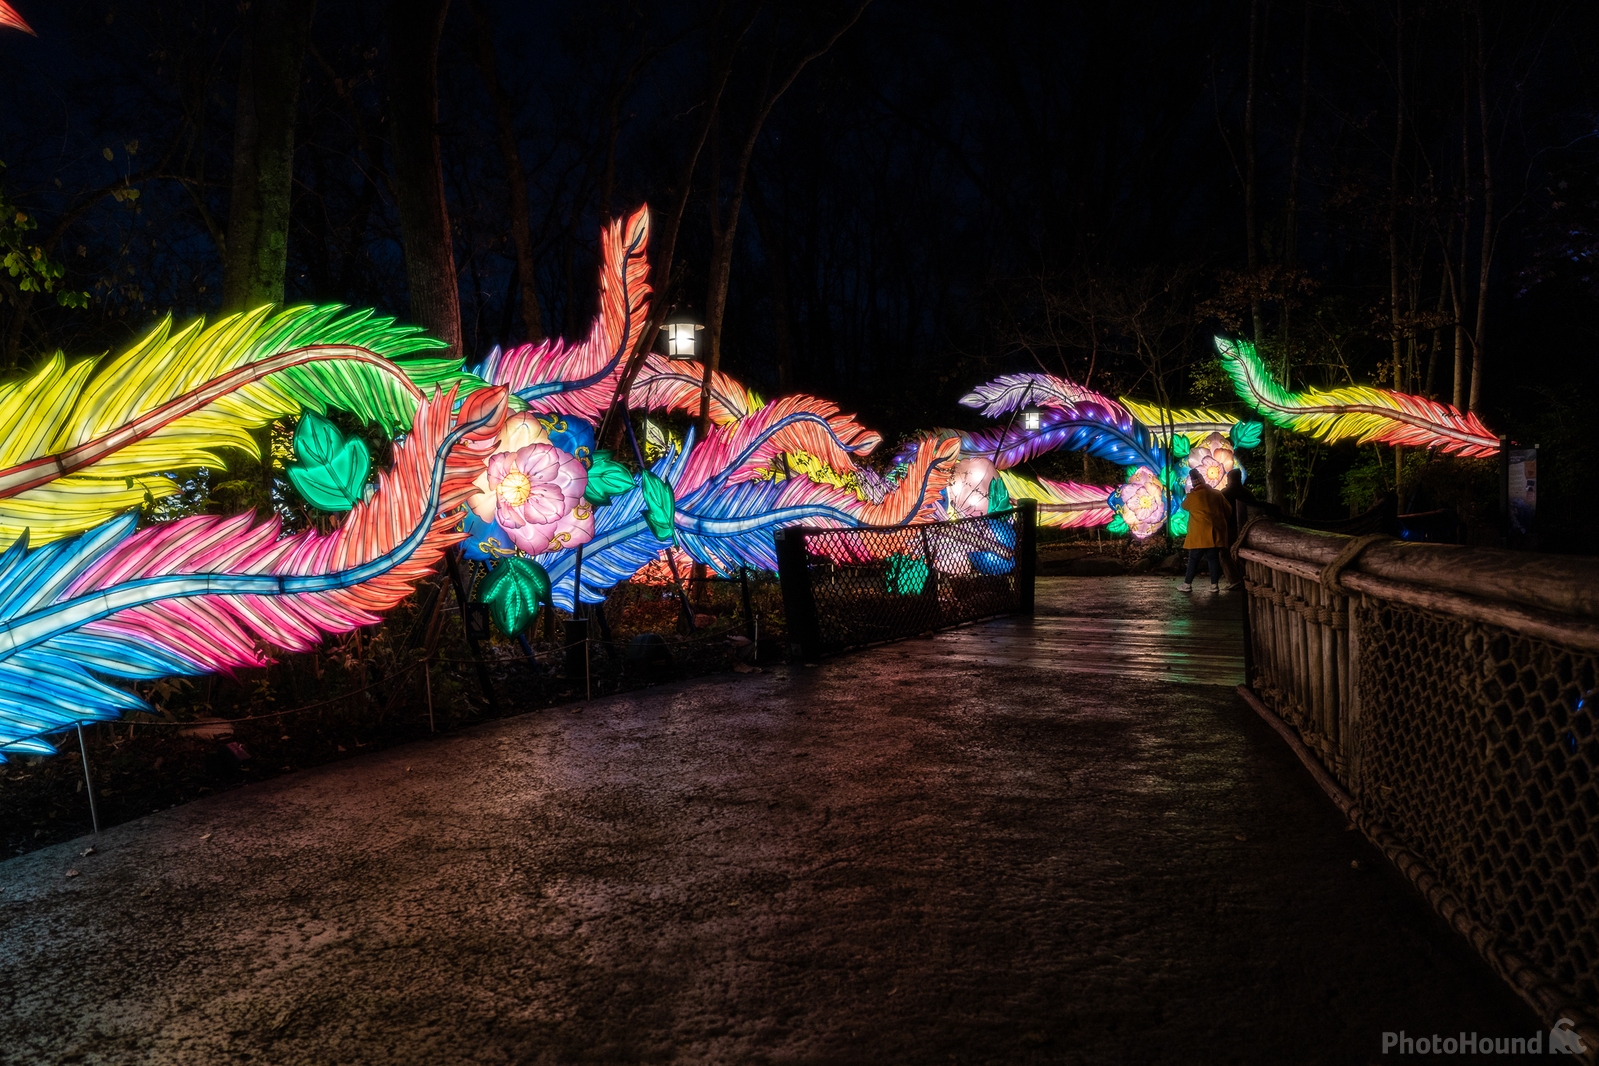 Image of Zoolumination at Nashville Zoo by James Billings.